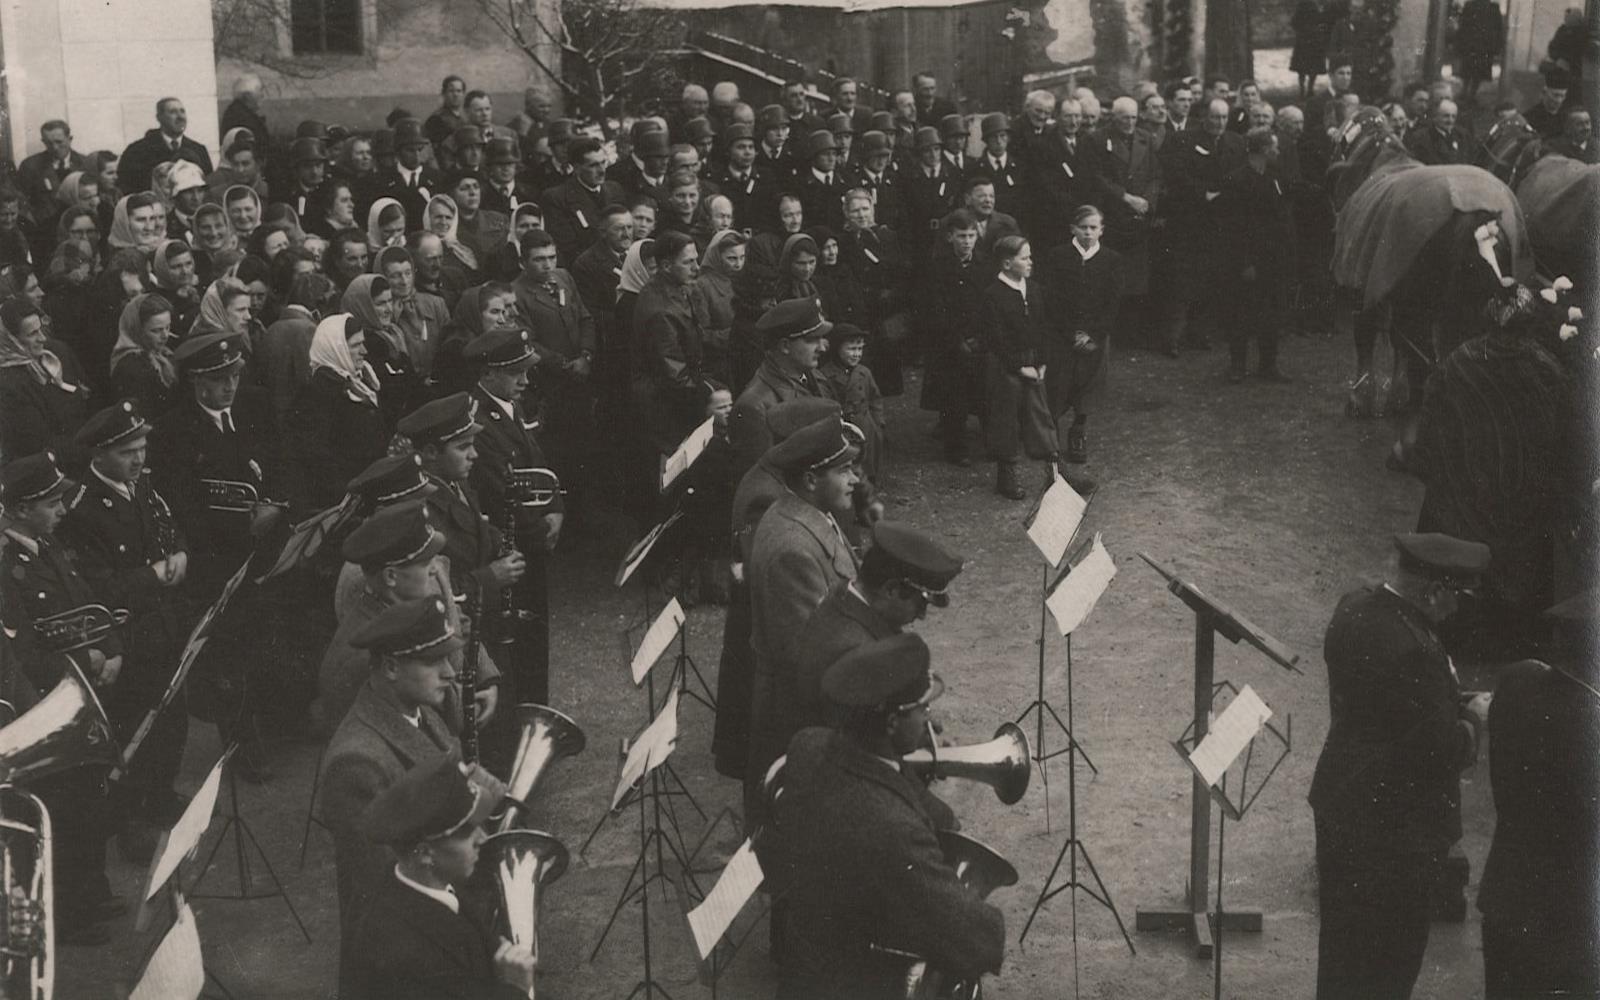 Glockenweihe 1952 in Neukirchen